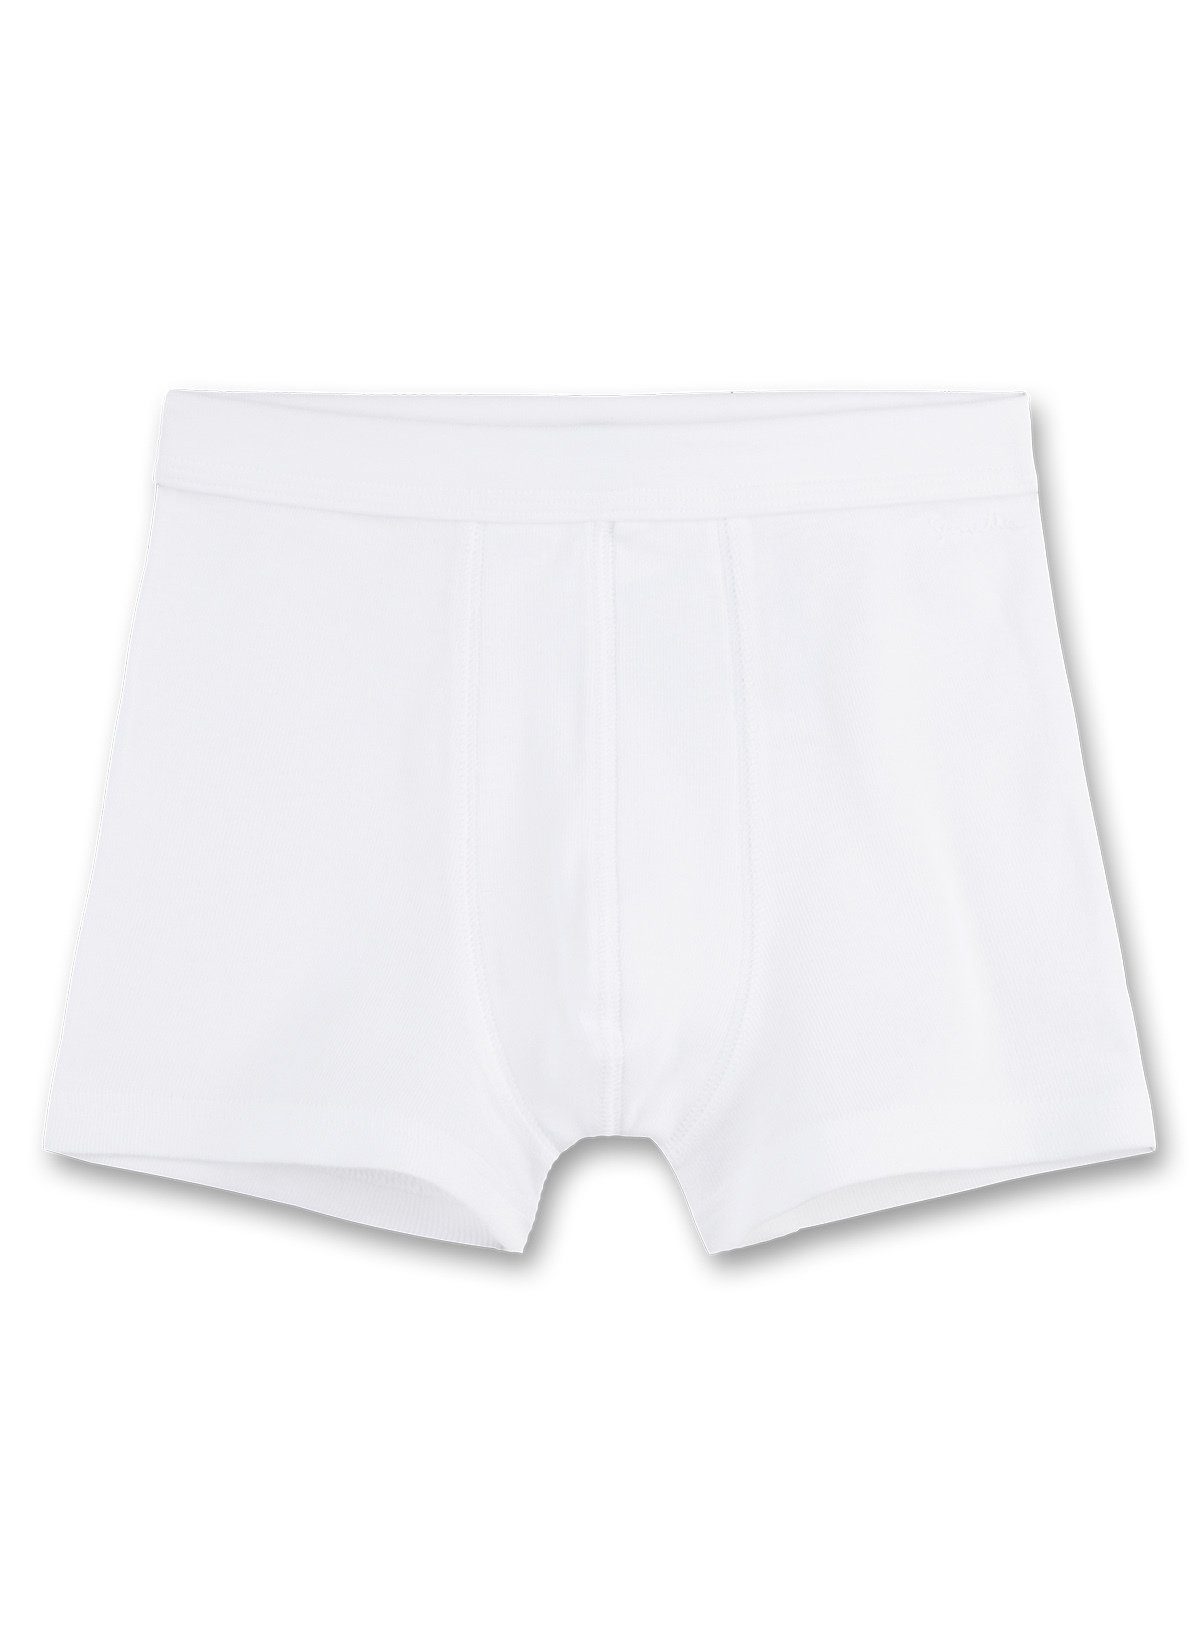 Sanetta Boxer Jungen Short - Pant, Unterhose, Organic Cotton Weiß